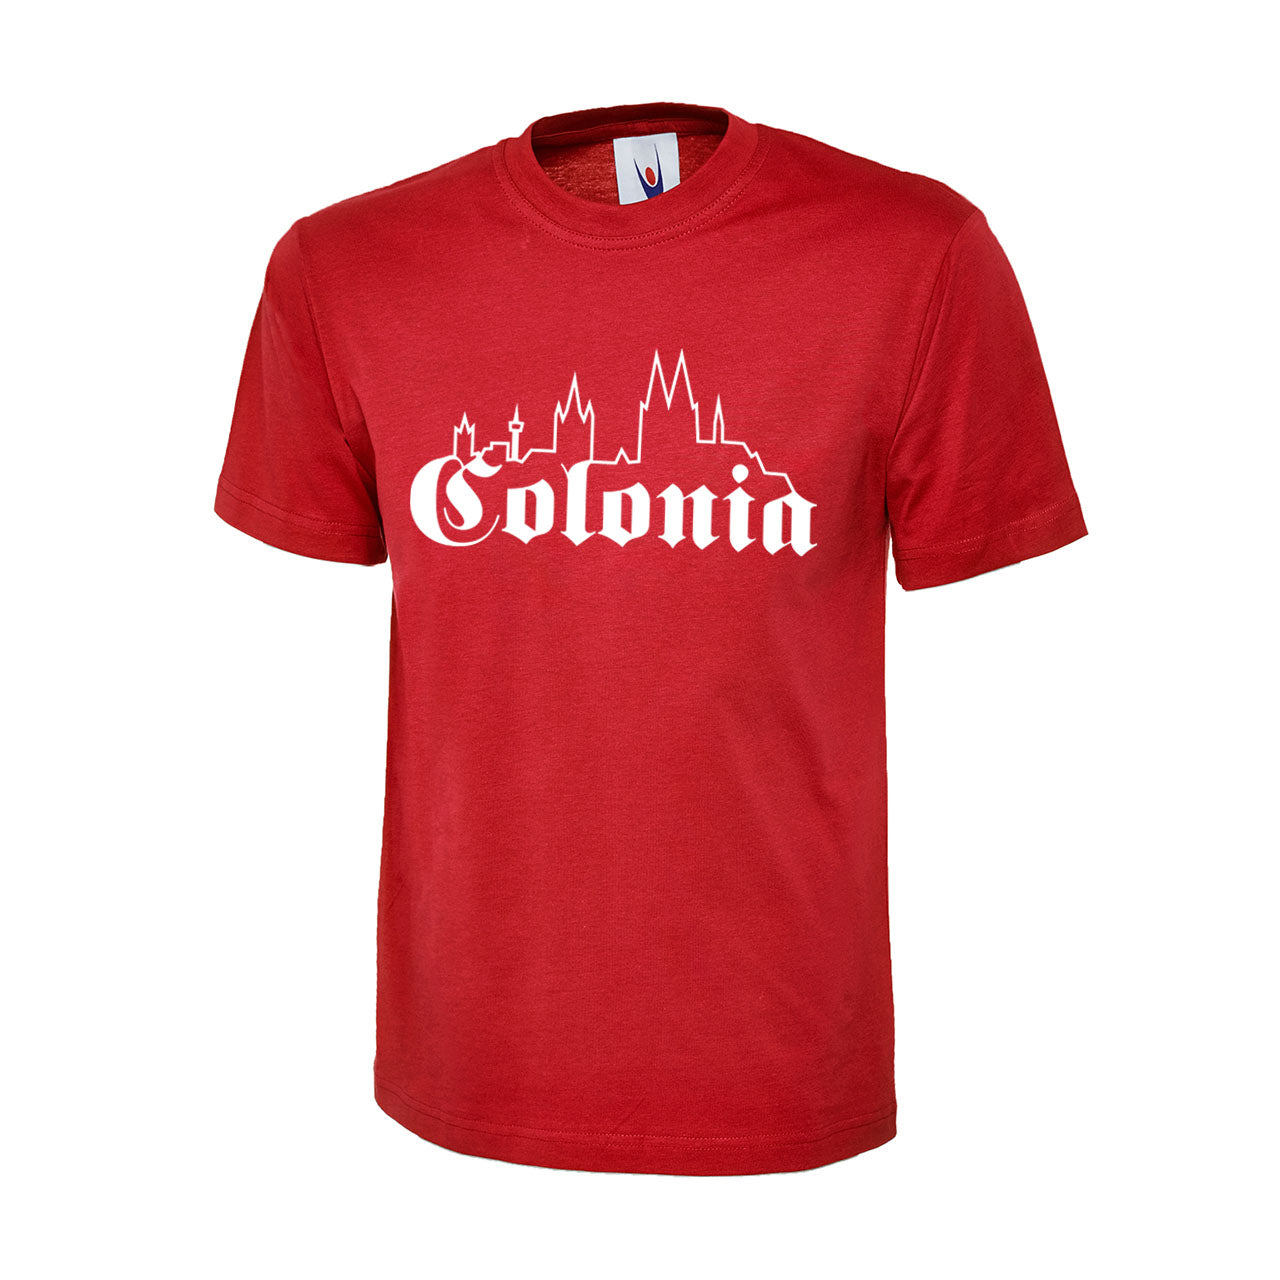 Herren T-Shirt - Colonia